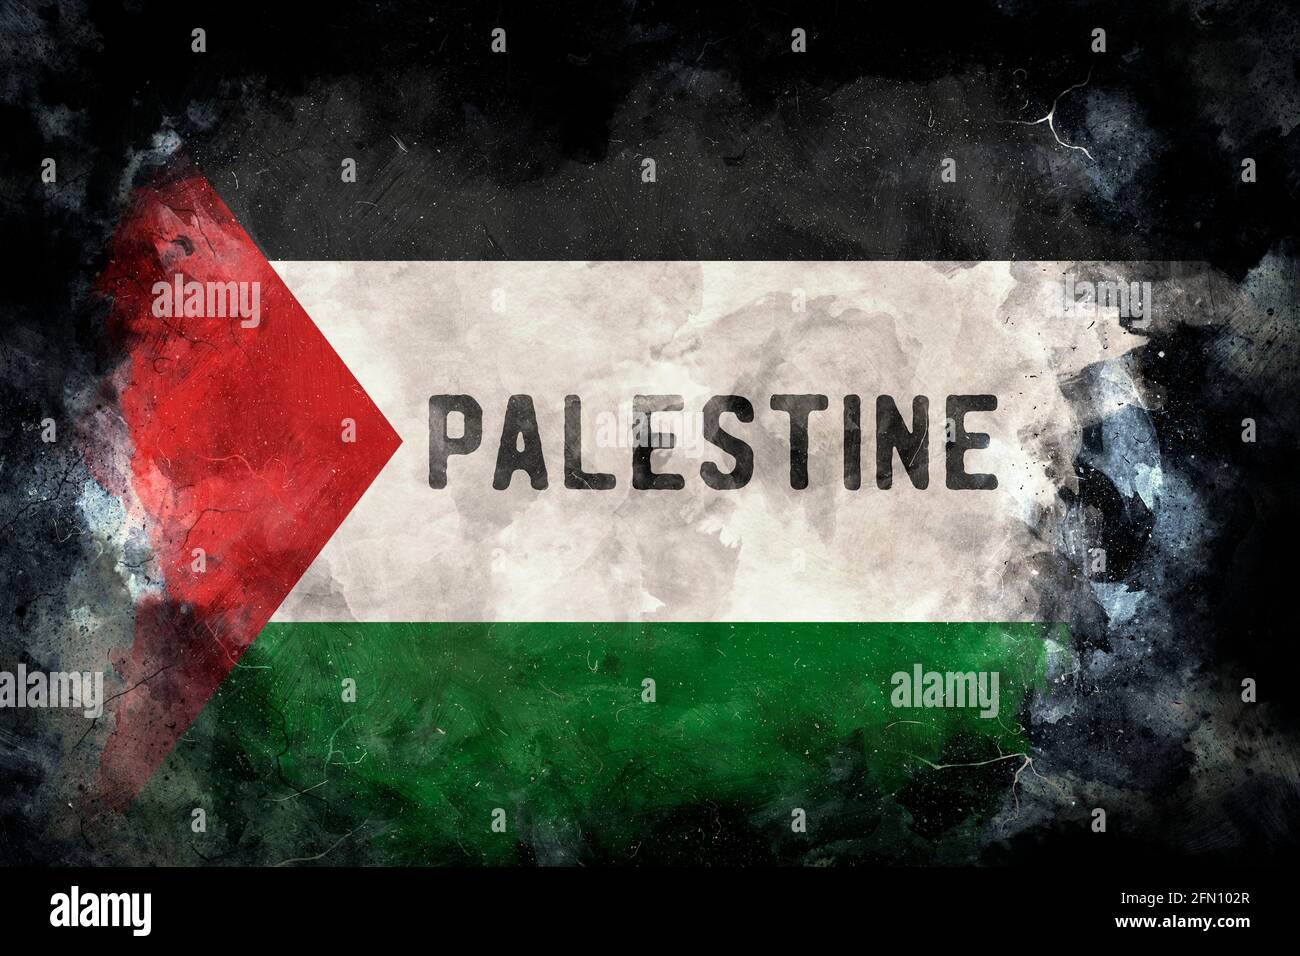 Palästina Flagge - Palästina Hintergrund Stockfotografie - Alamy